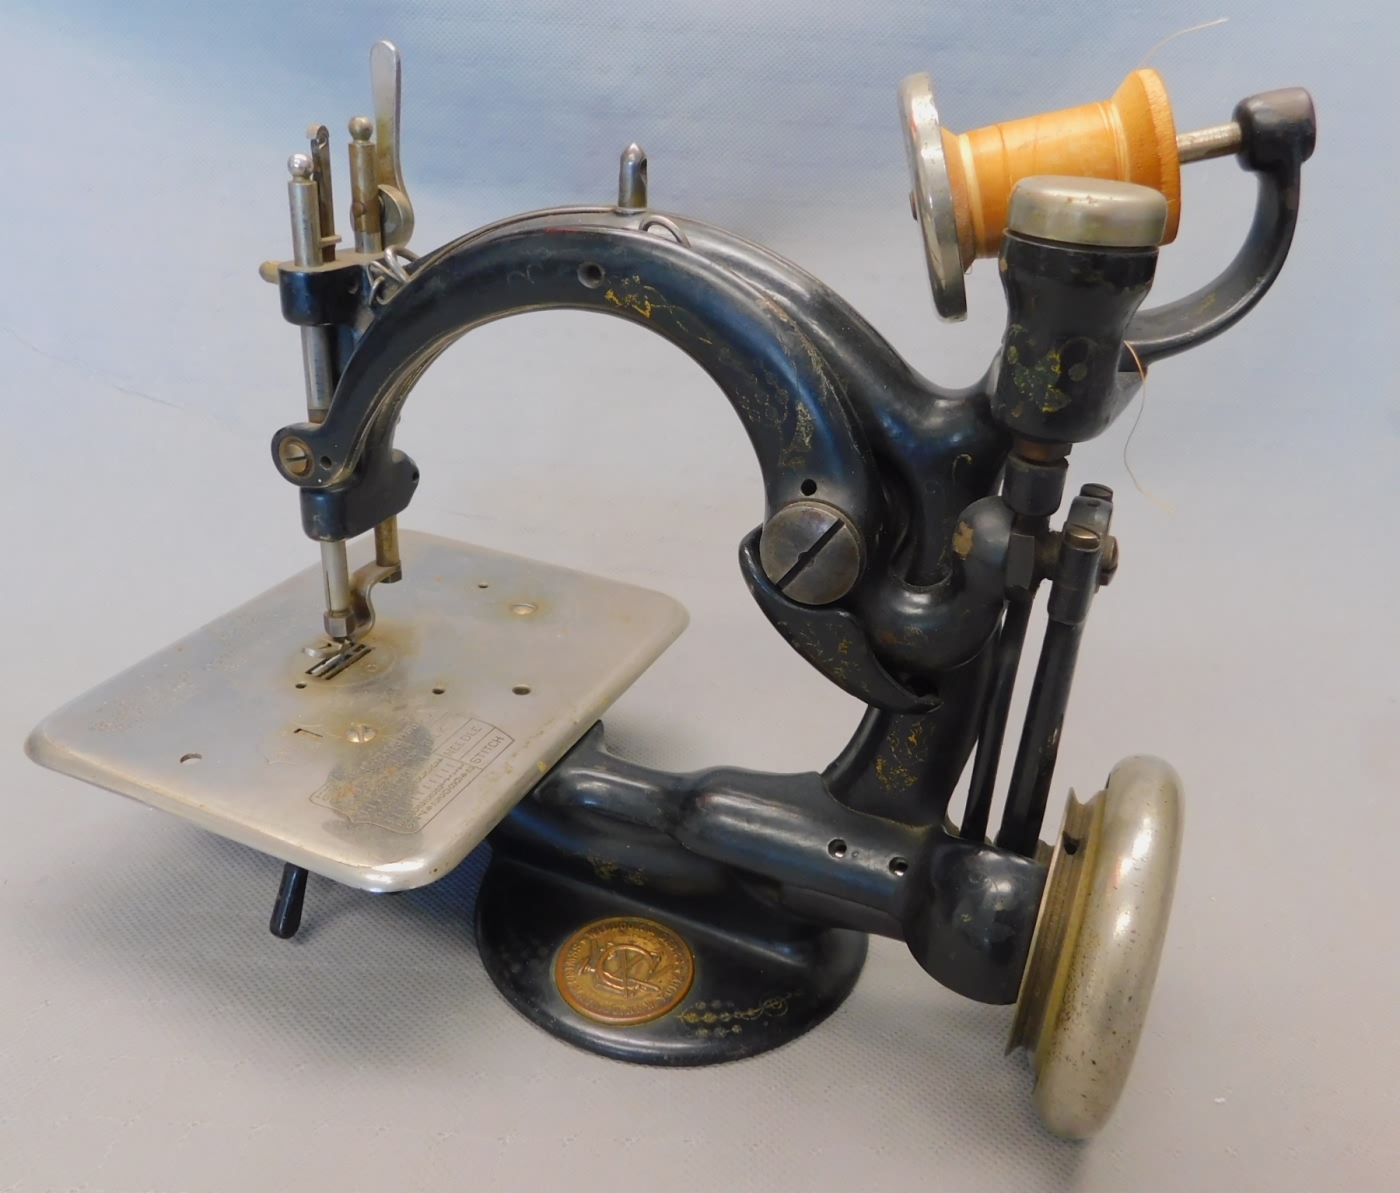 Details about   Goldman's 1882  Patent Automatic Tuck Folders Sewing Machines Antique Original 